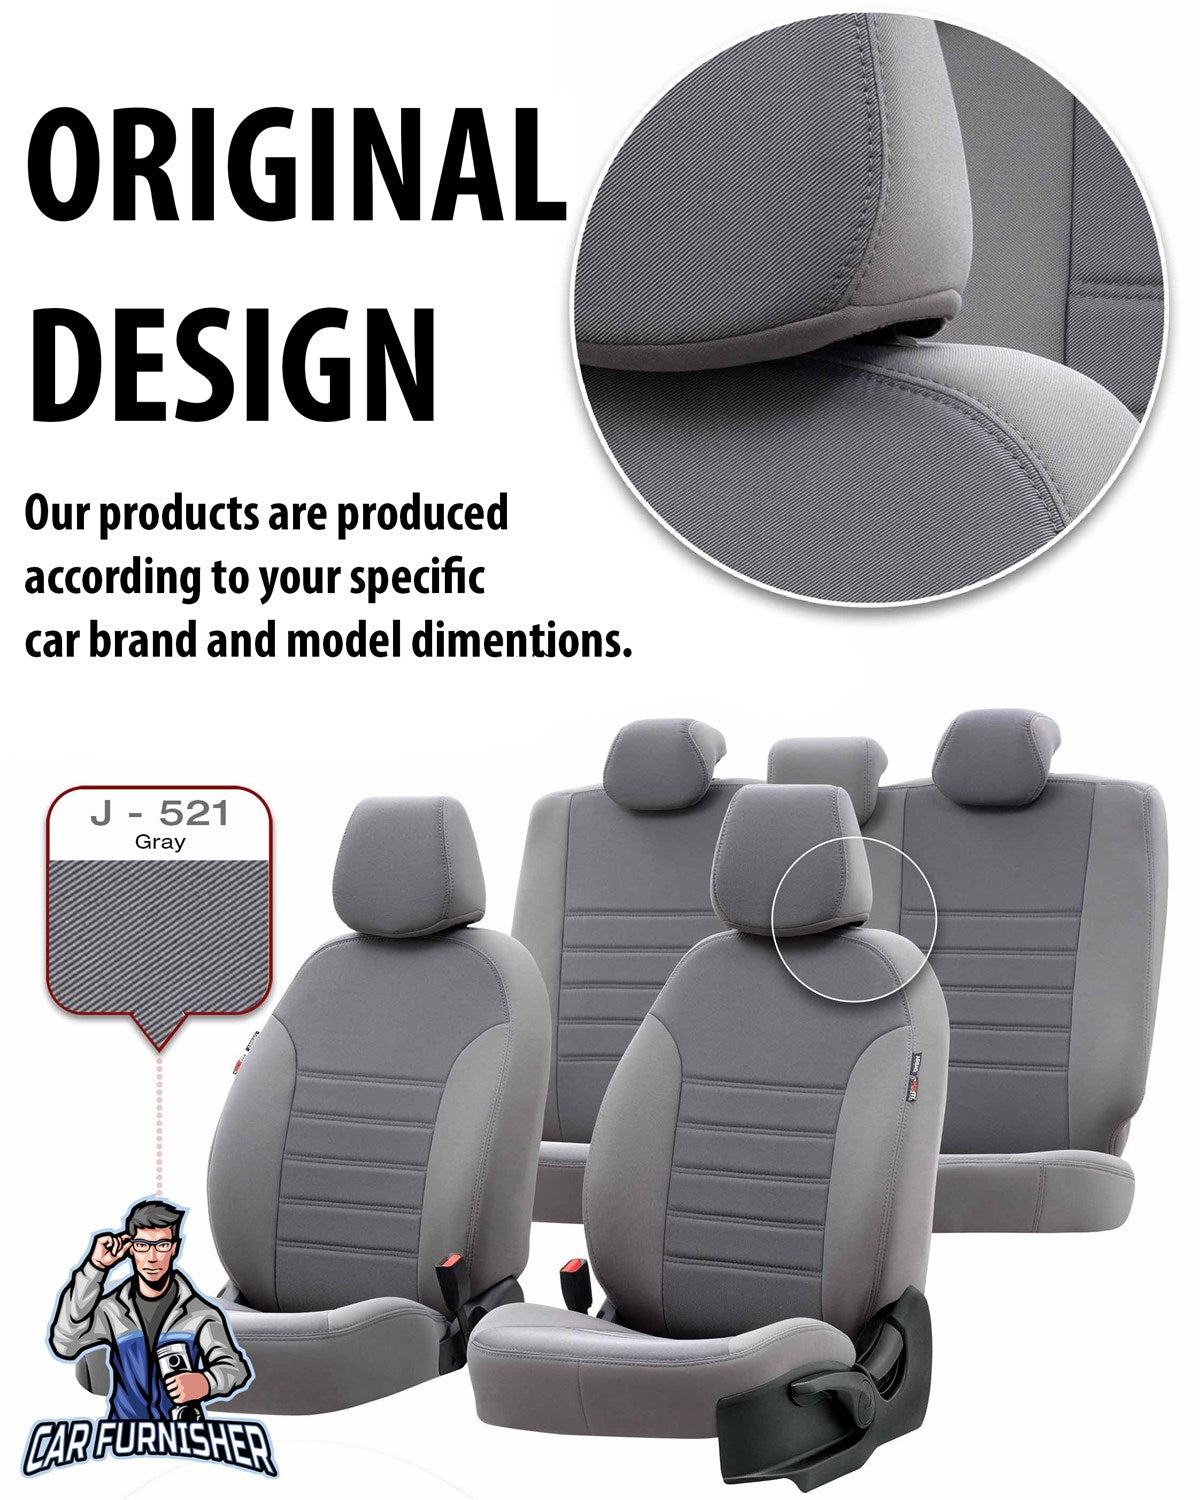 Renault Twingo Seat Cover Original Jacquard Design Gray Jacquard Fabric